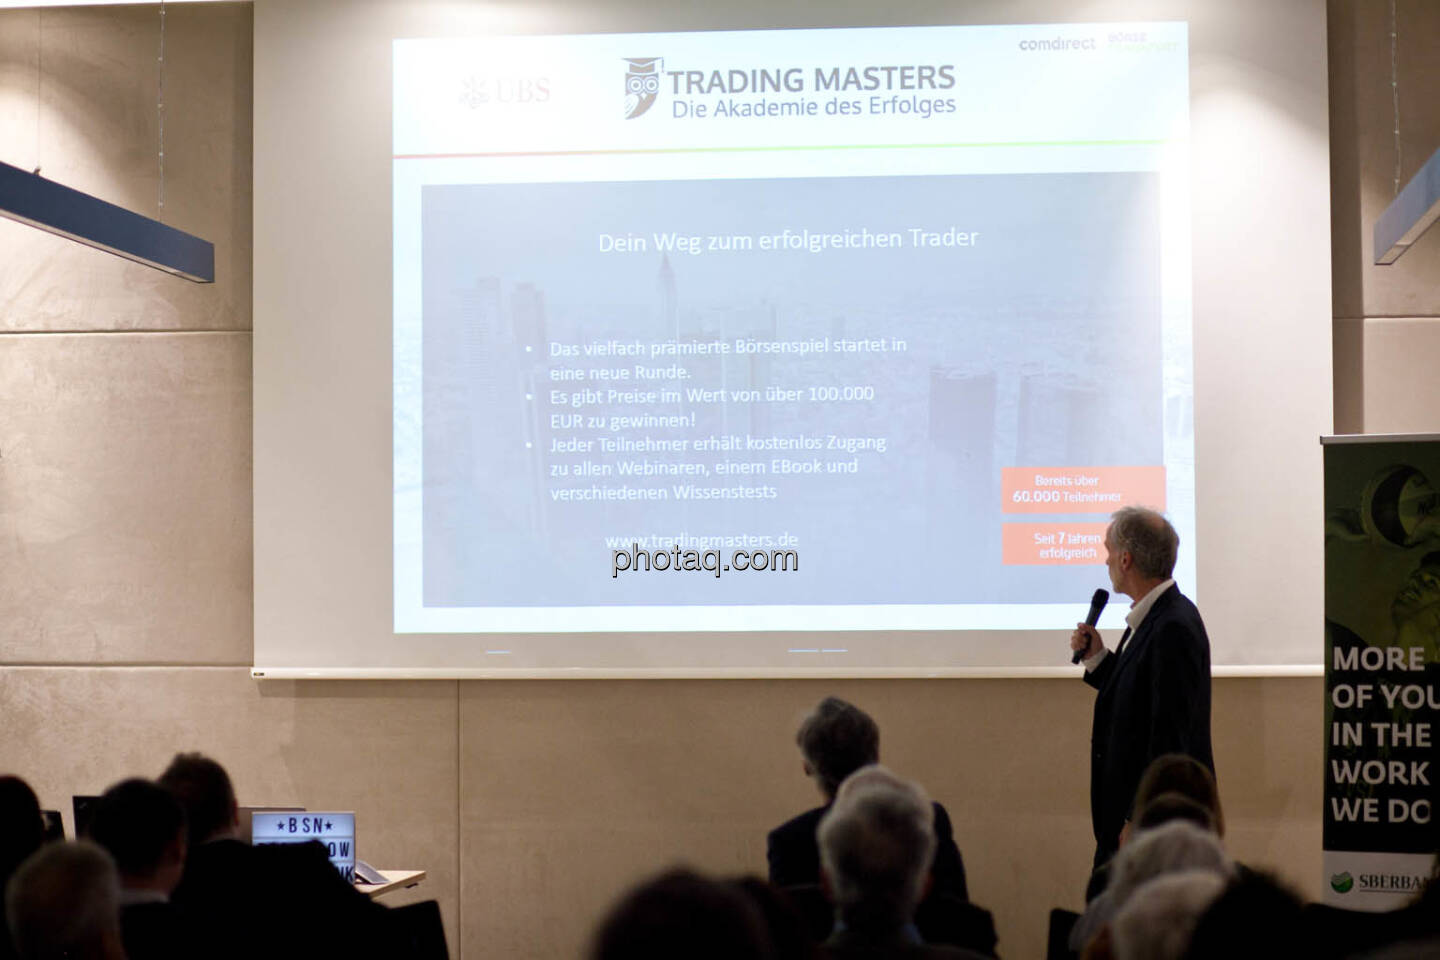 UBS Trading Masters - Christian Drastil (Börse Social Network) - (Fotocredit: Michaela Mejta for photaq.com)